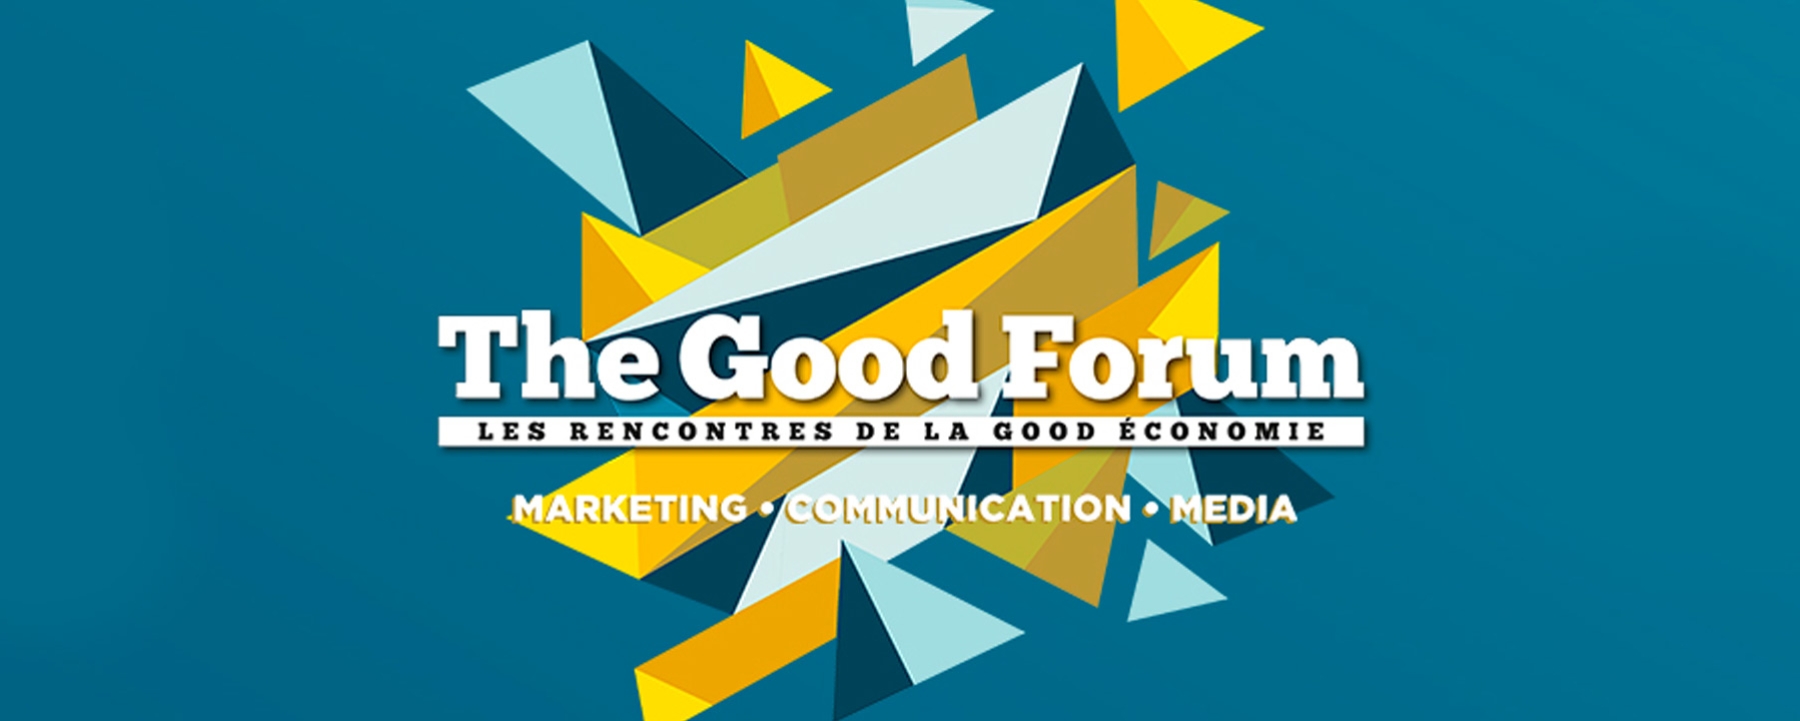 The Good Forum